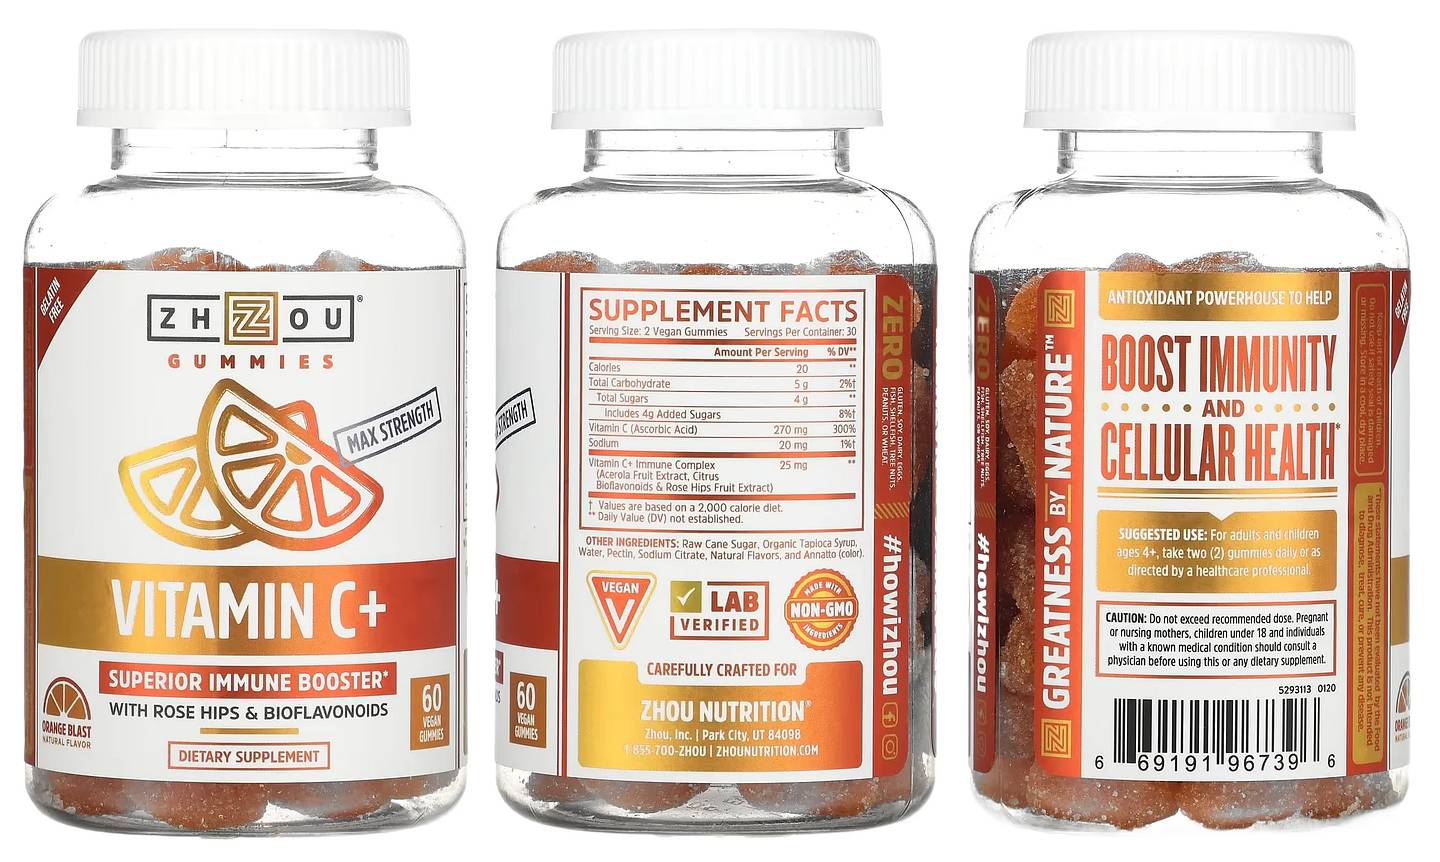 Zhou Nutrition, Vitamin C+ packaging